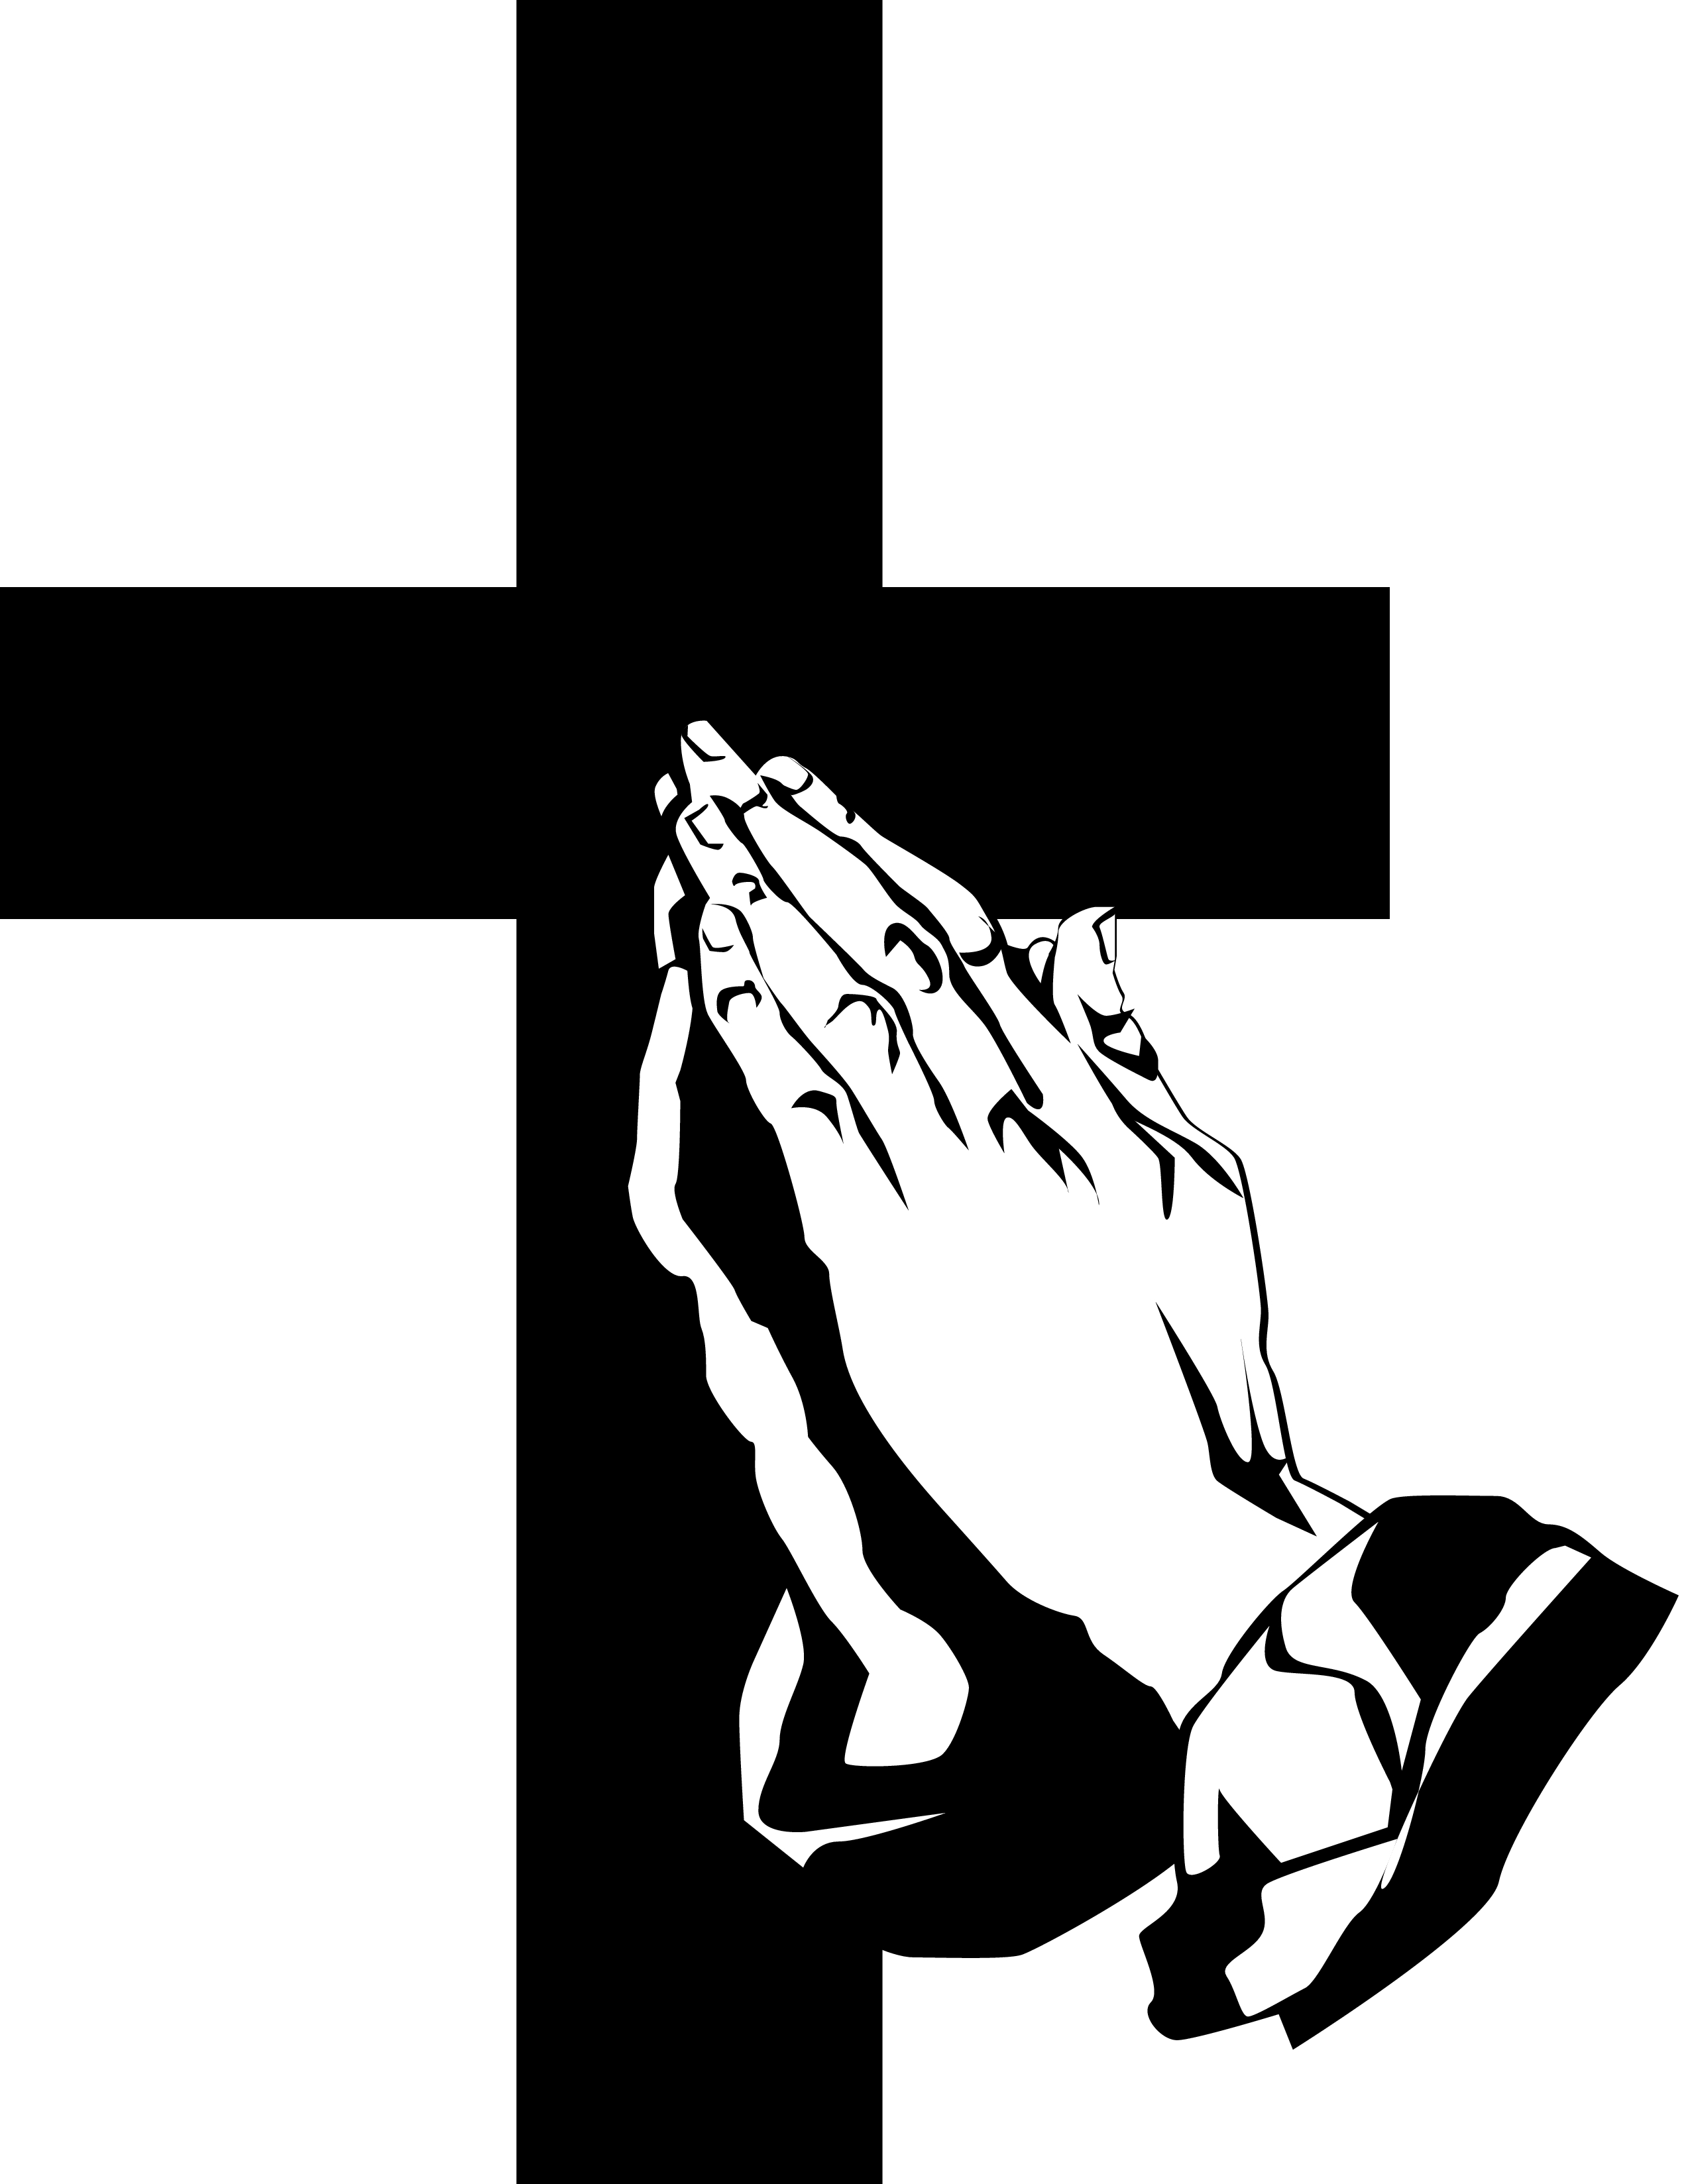 Praying hands prayer hand clipart - Cliparting.com